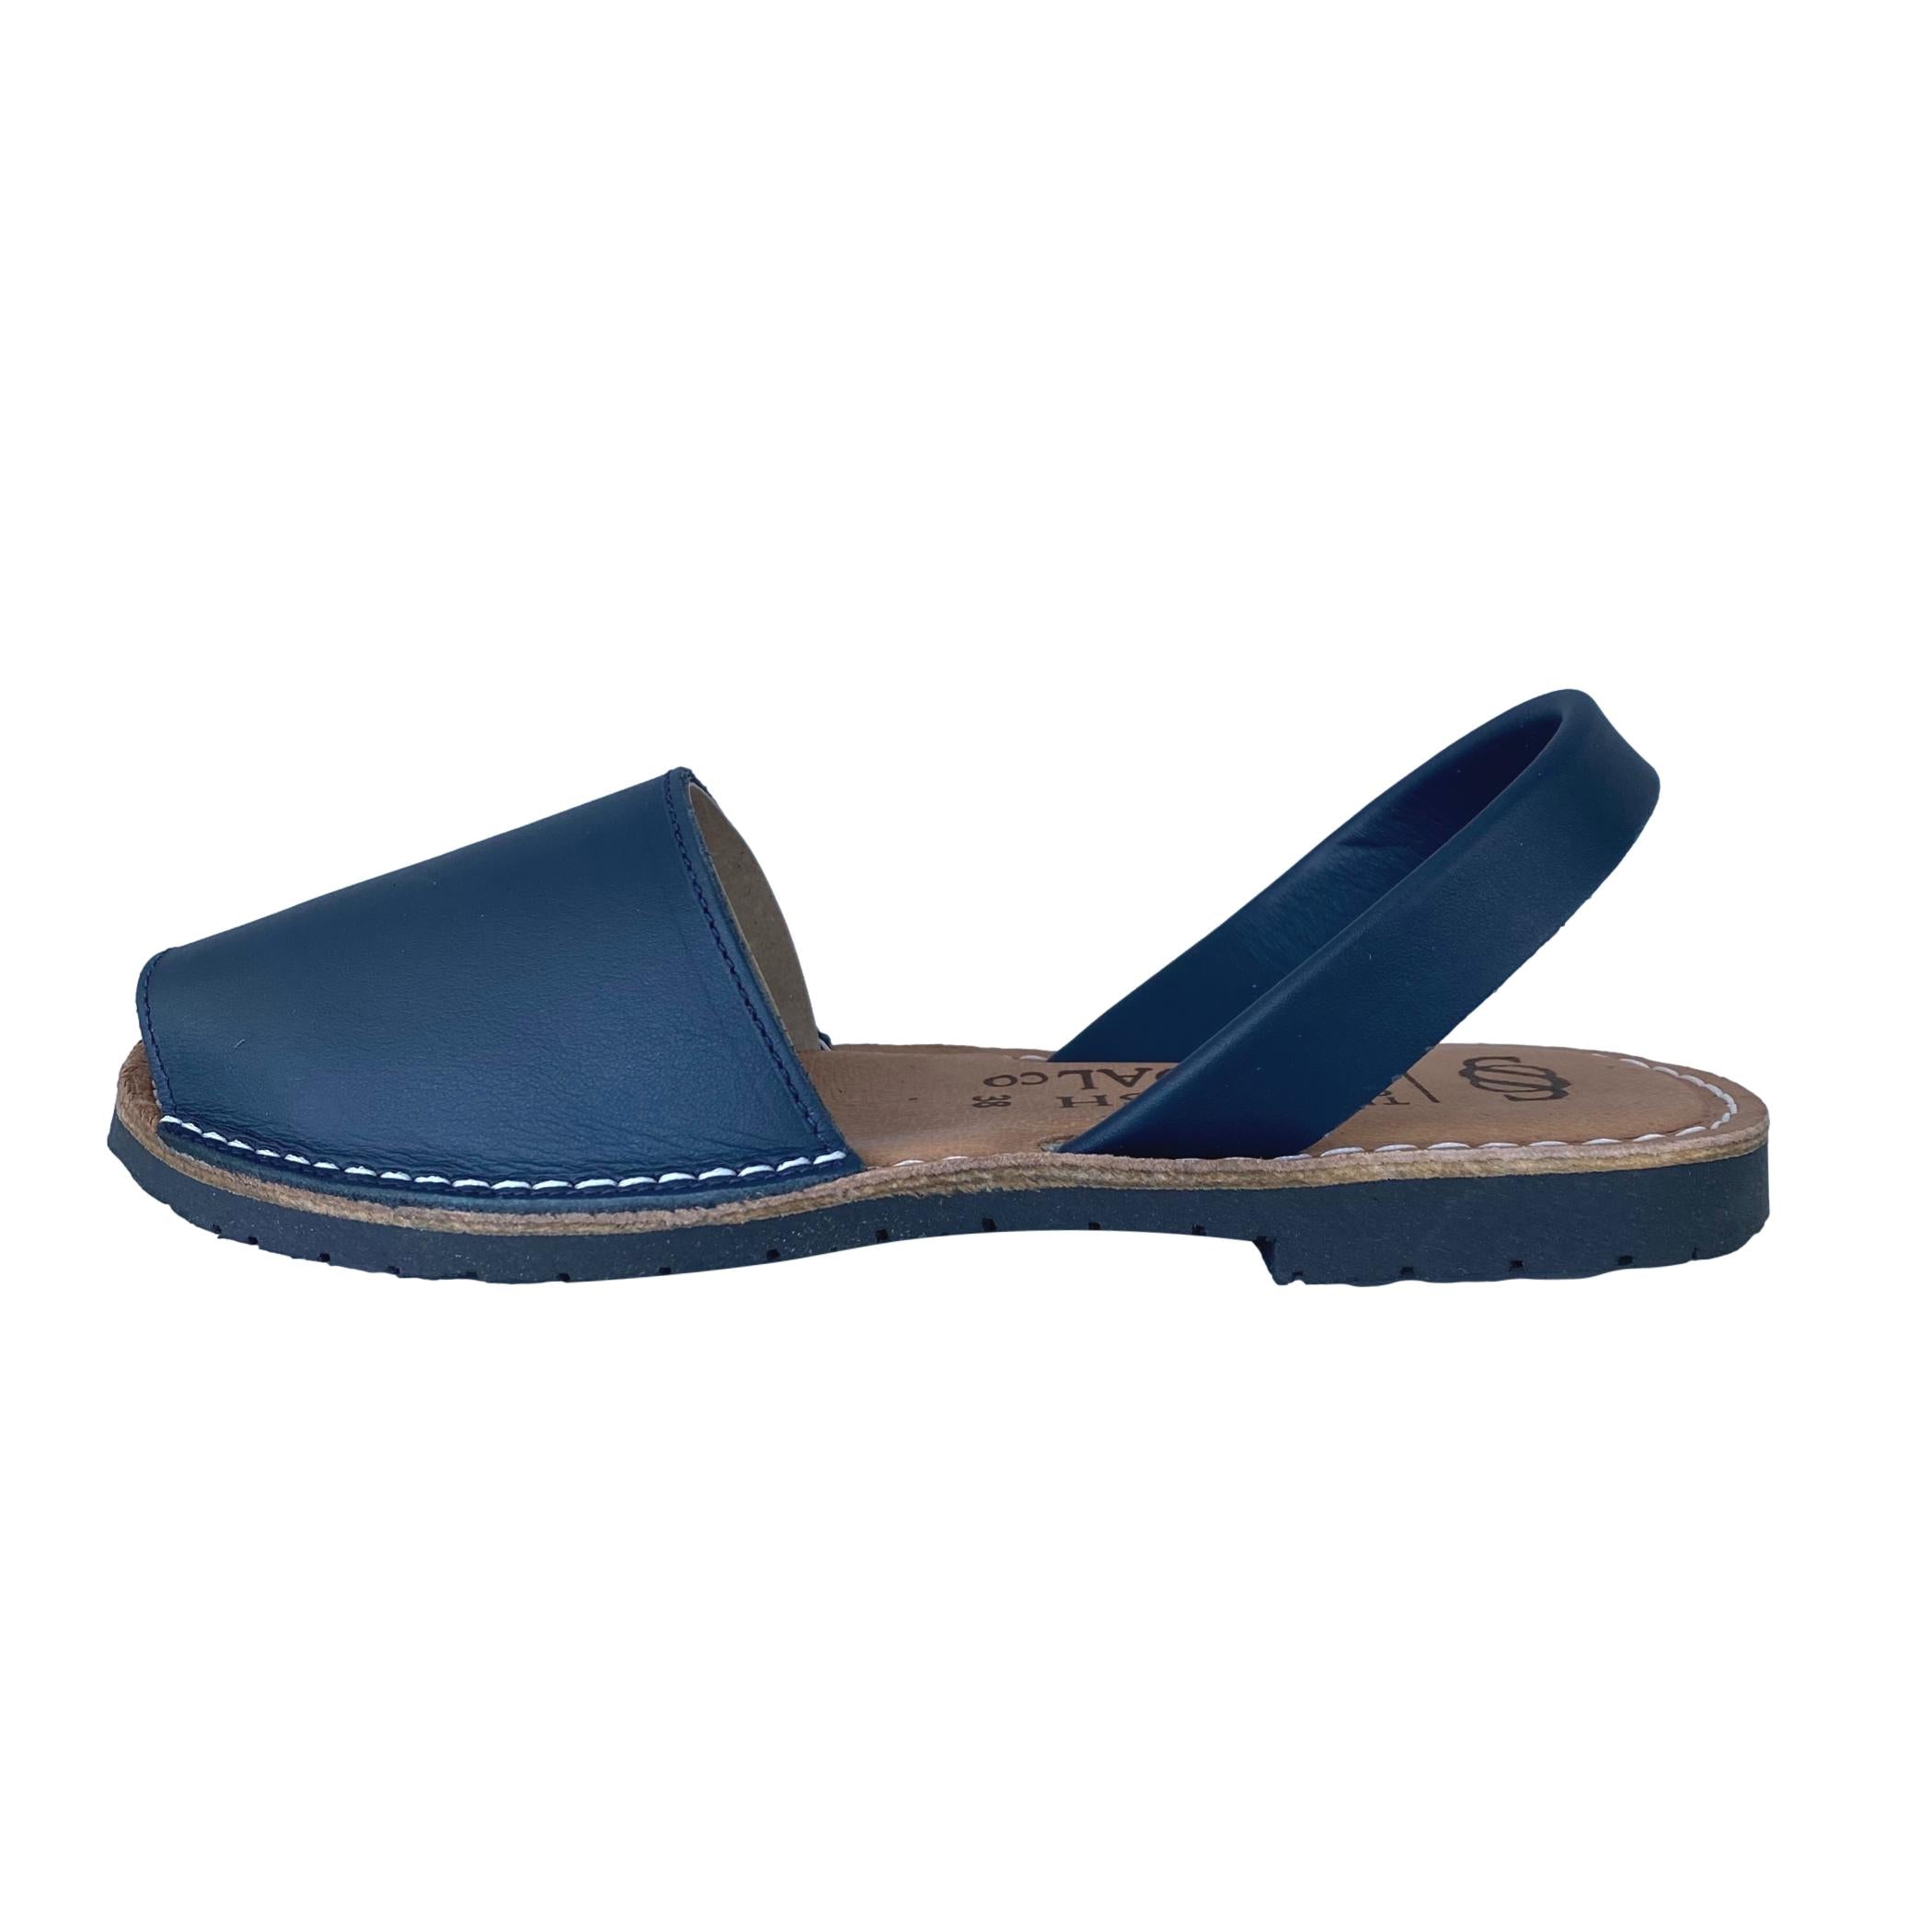 Classic Navy Blue sandals